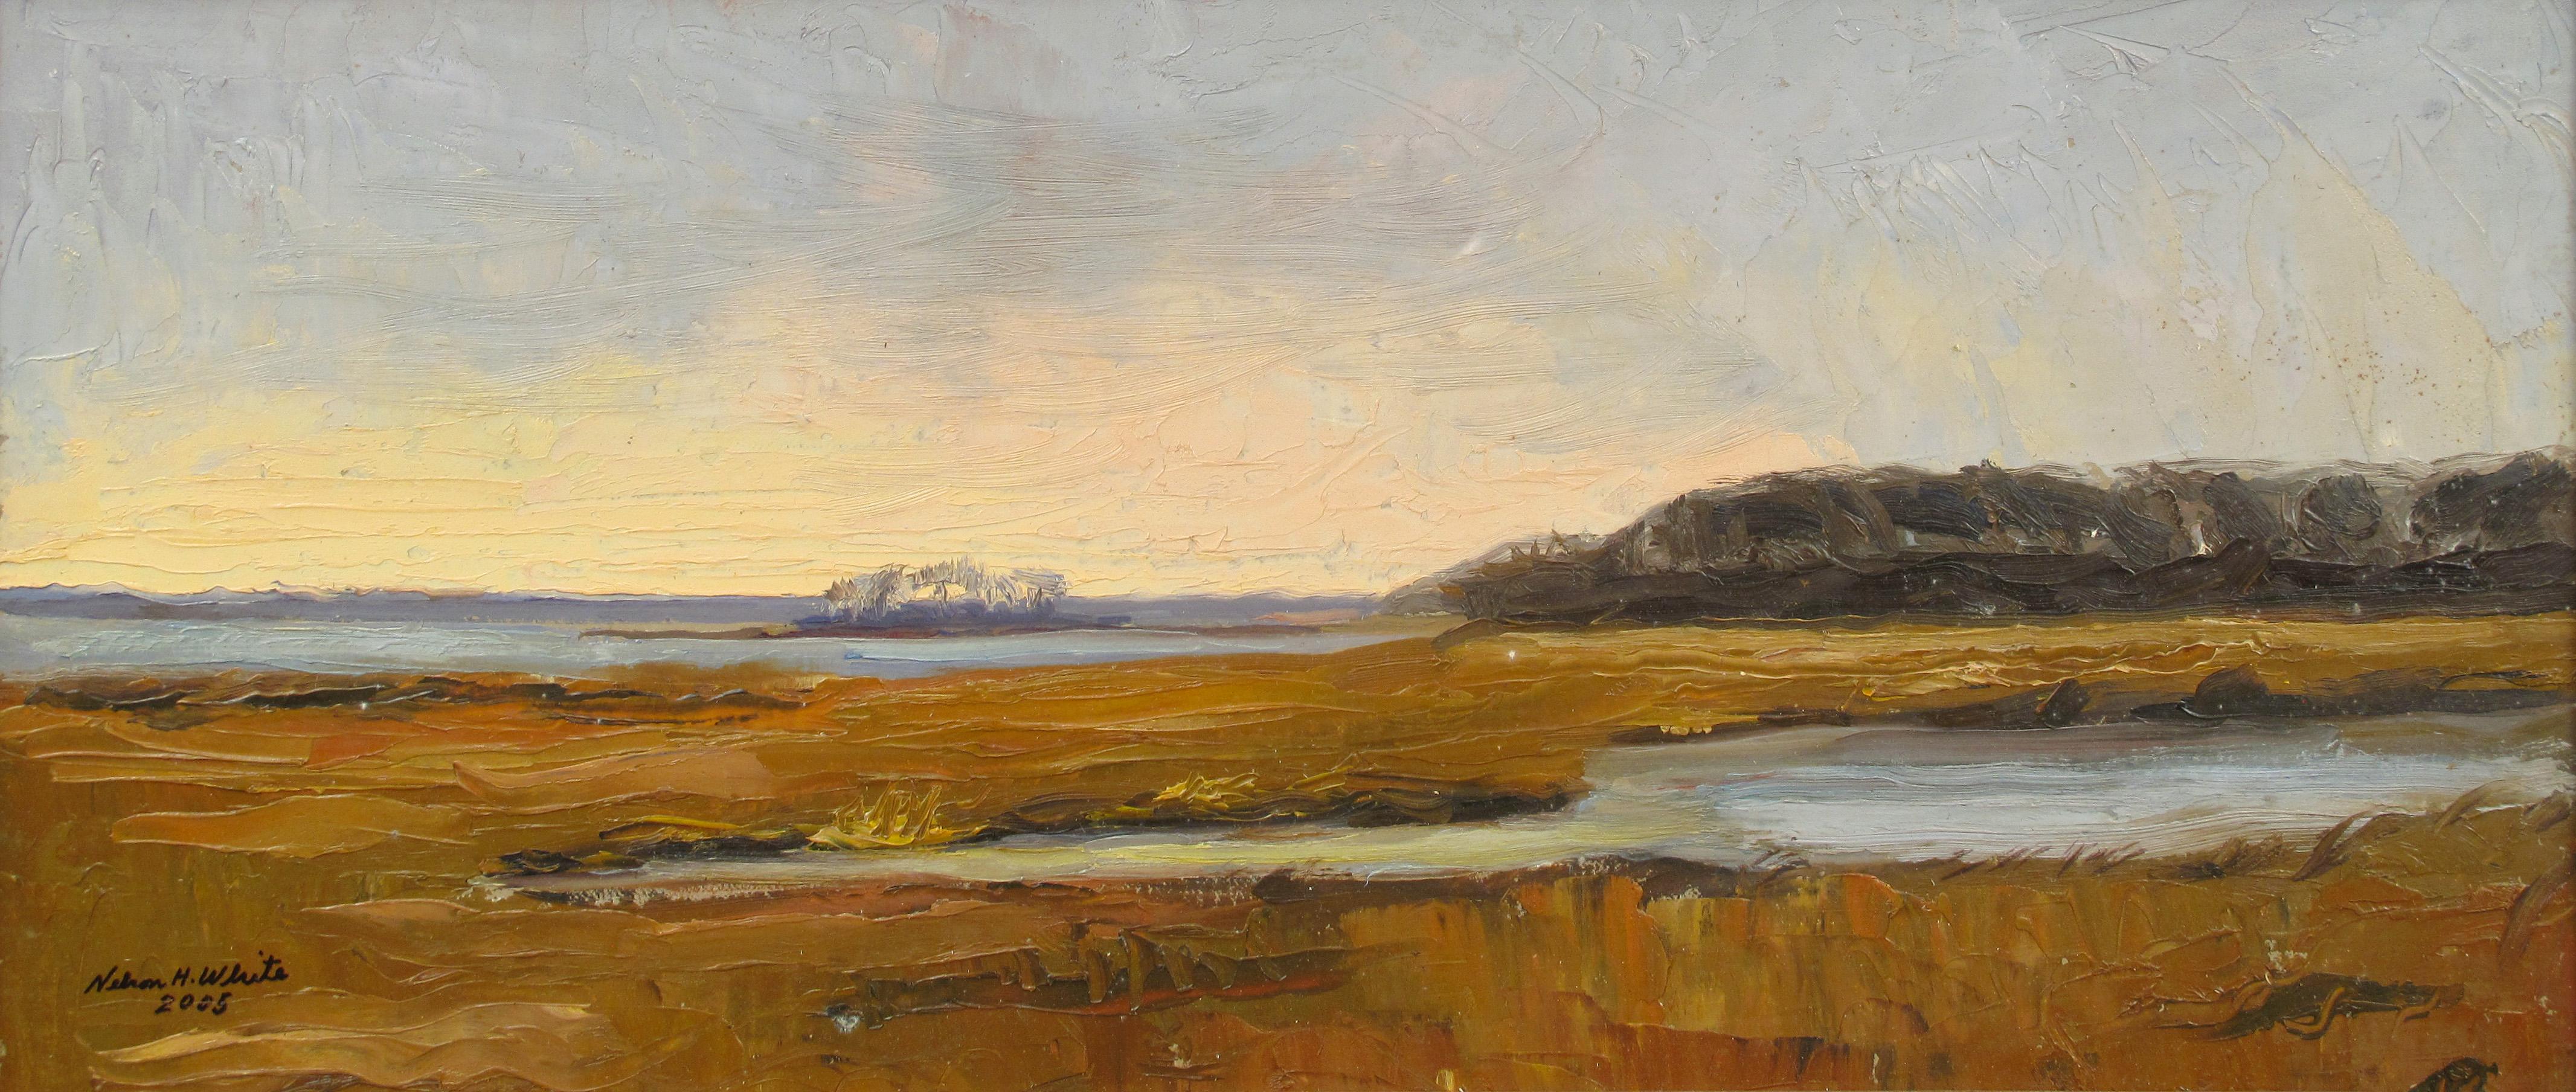 Nelson H. White Landscape Painting - Mashomack Pt 12.27.2005